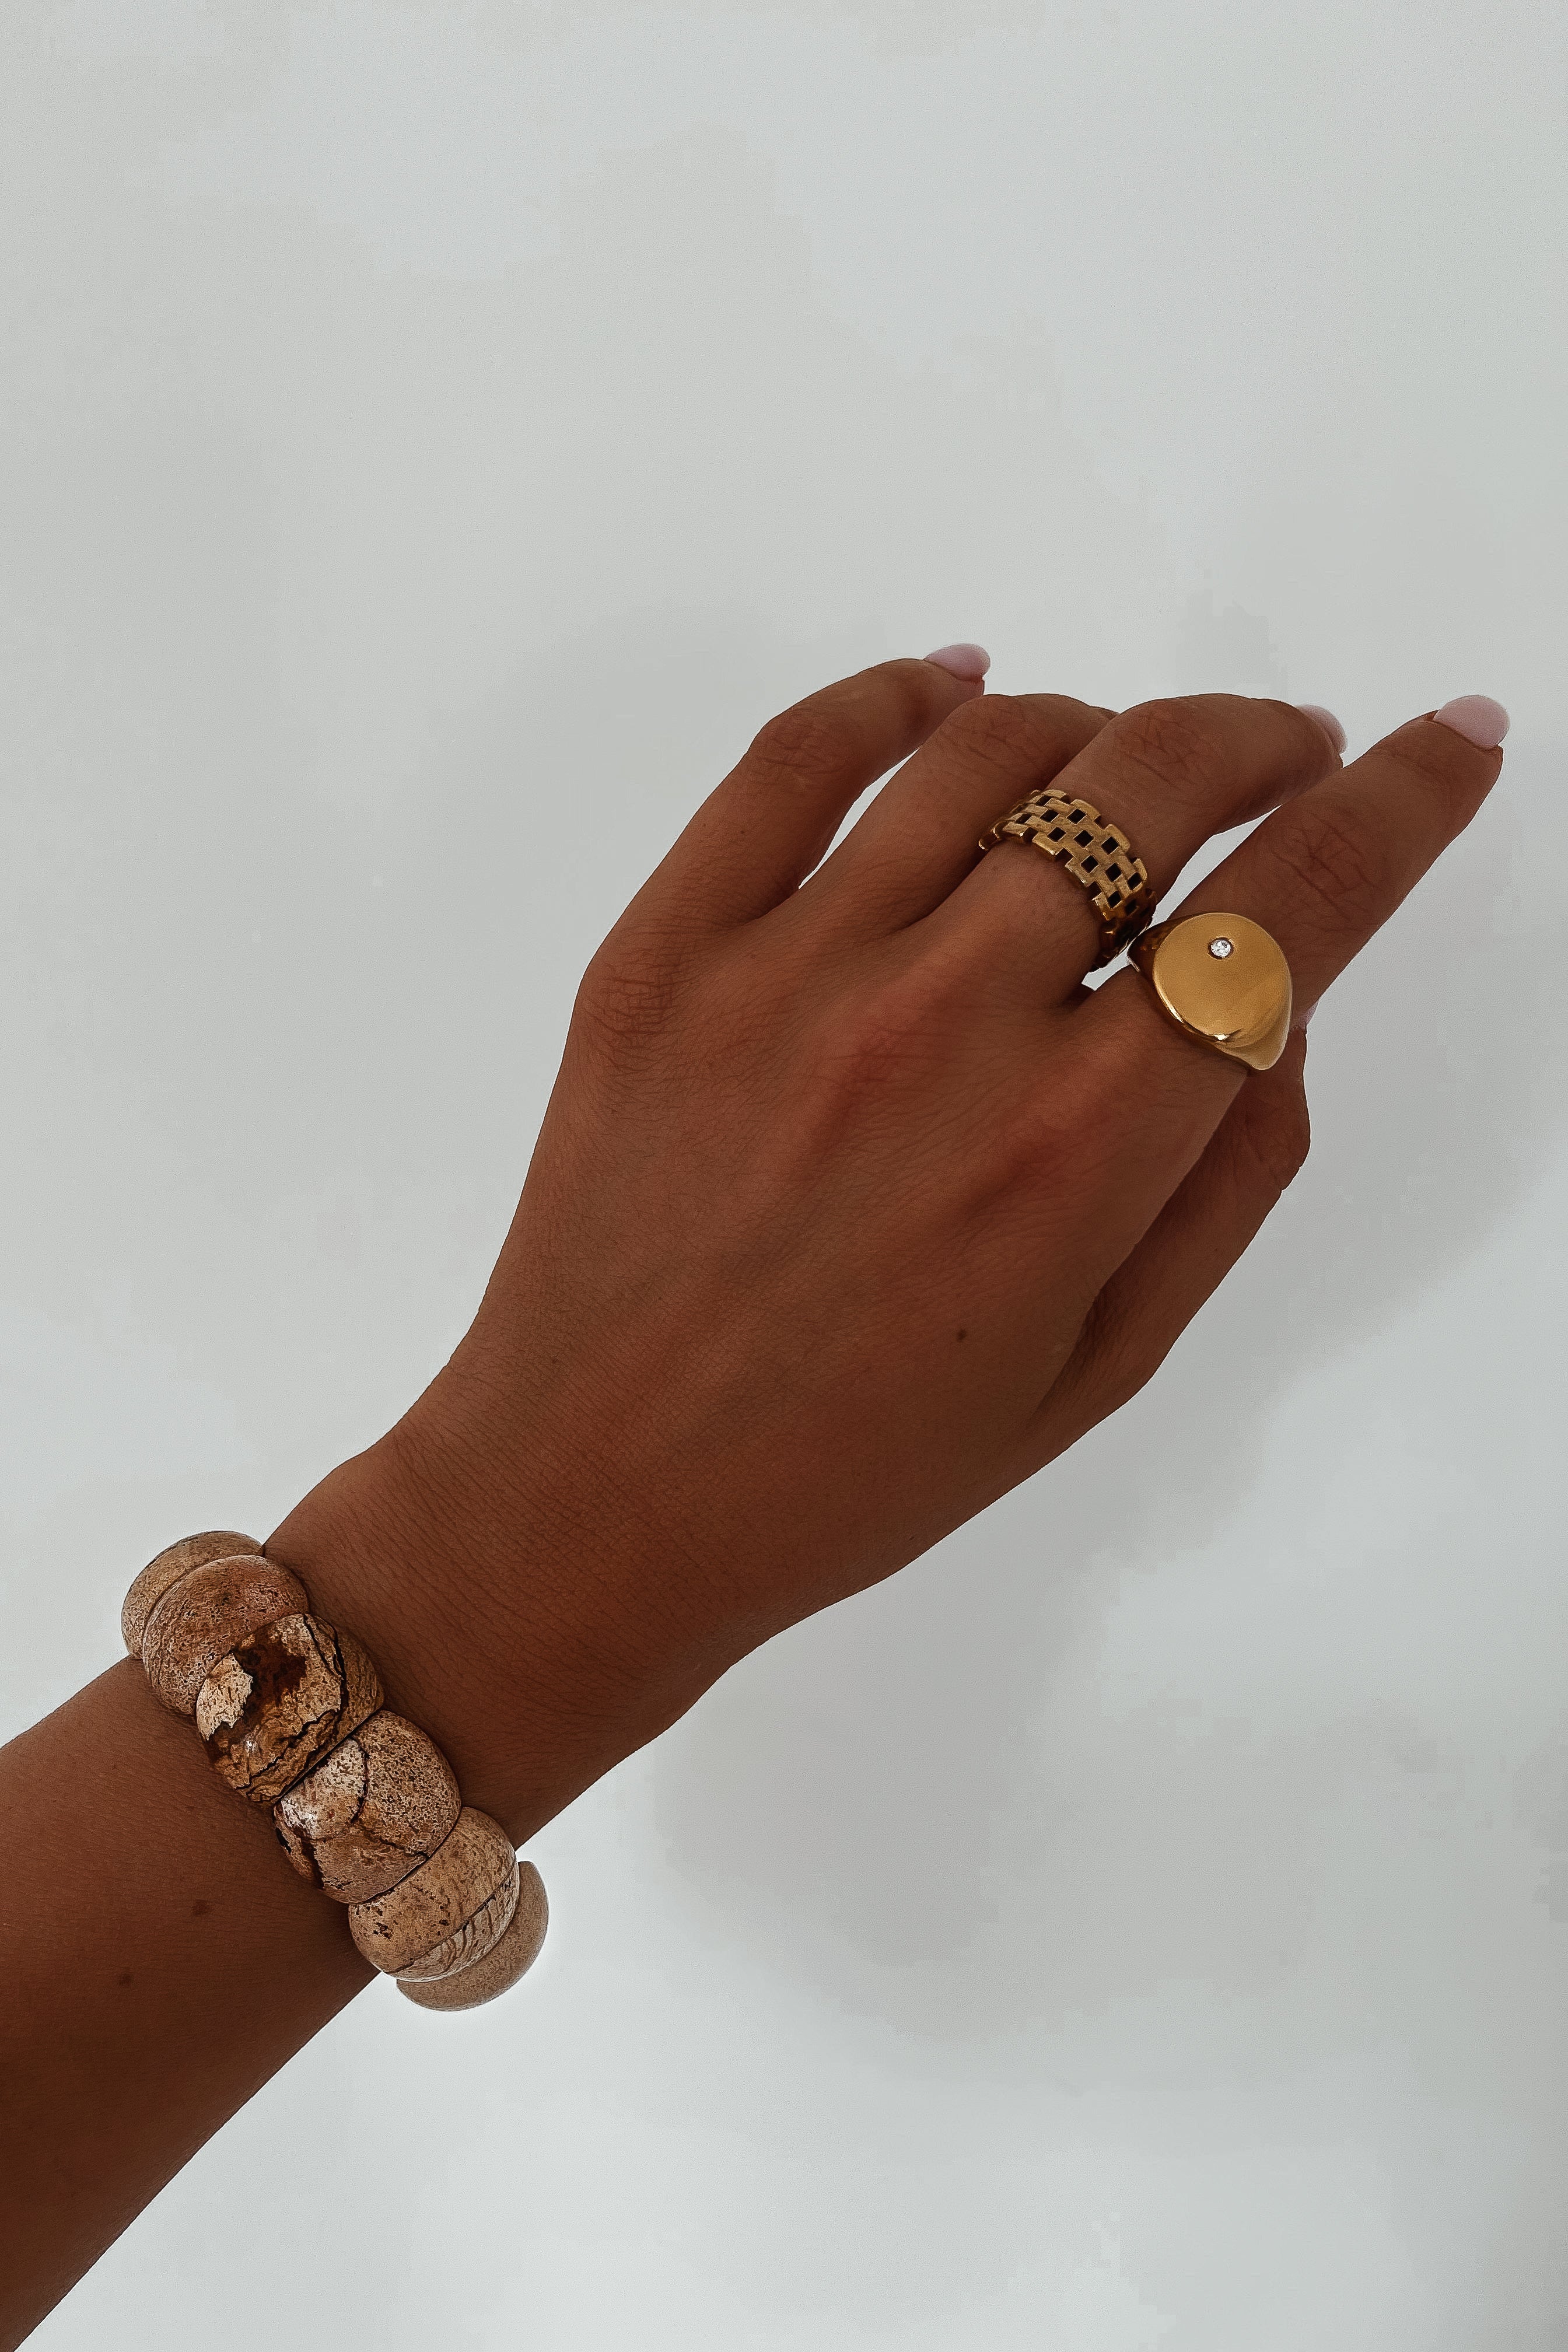 Natasha Ring - Boutique Minimaliste has waterproof, durable, elegant and vintage inspired jewelry